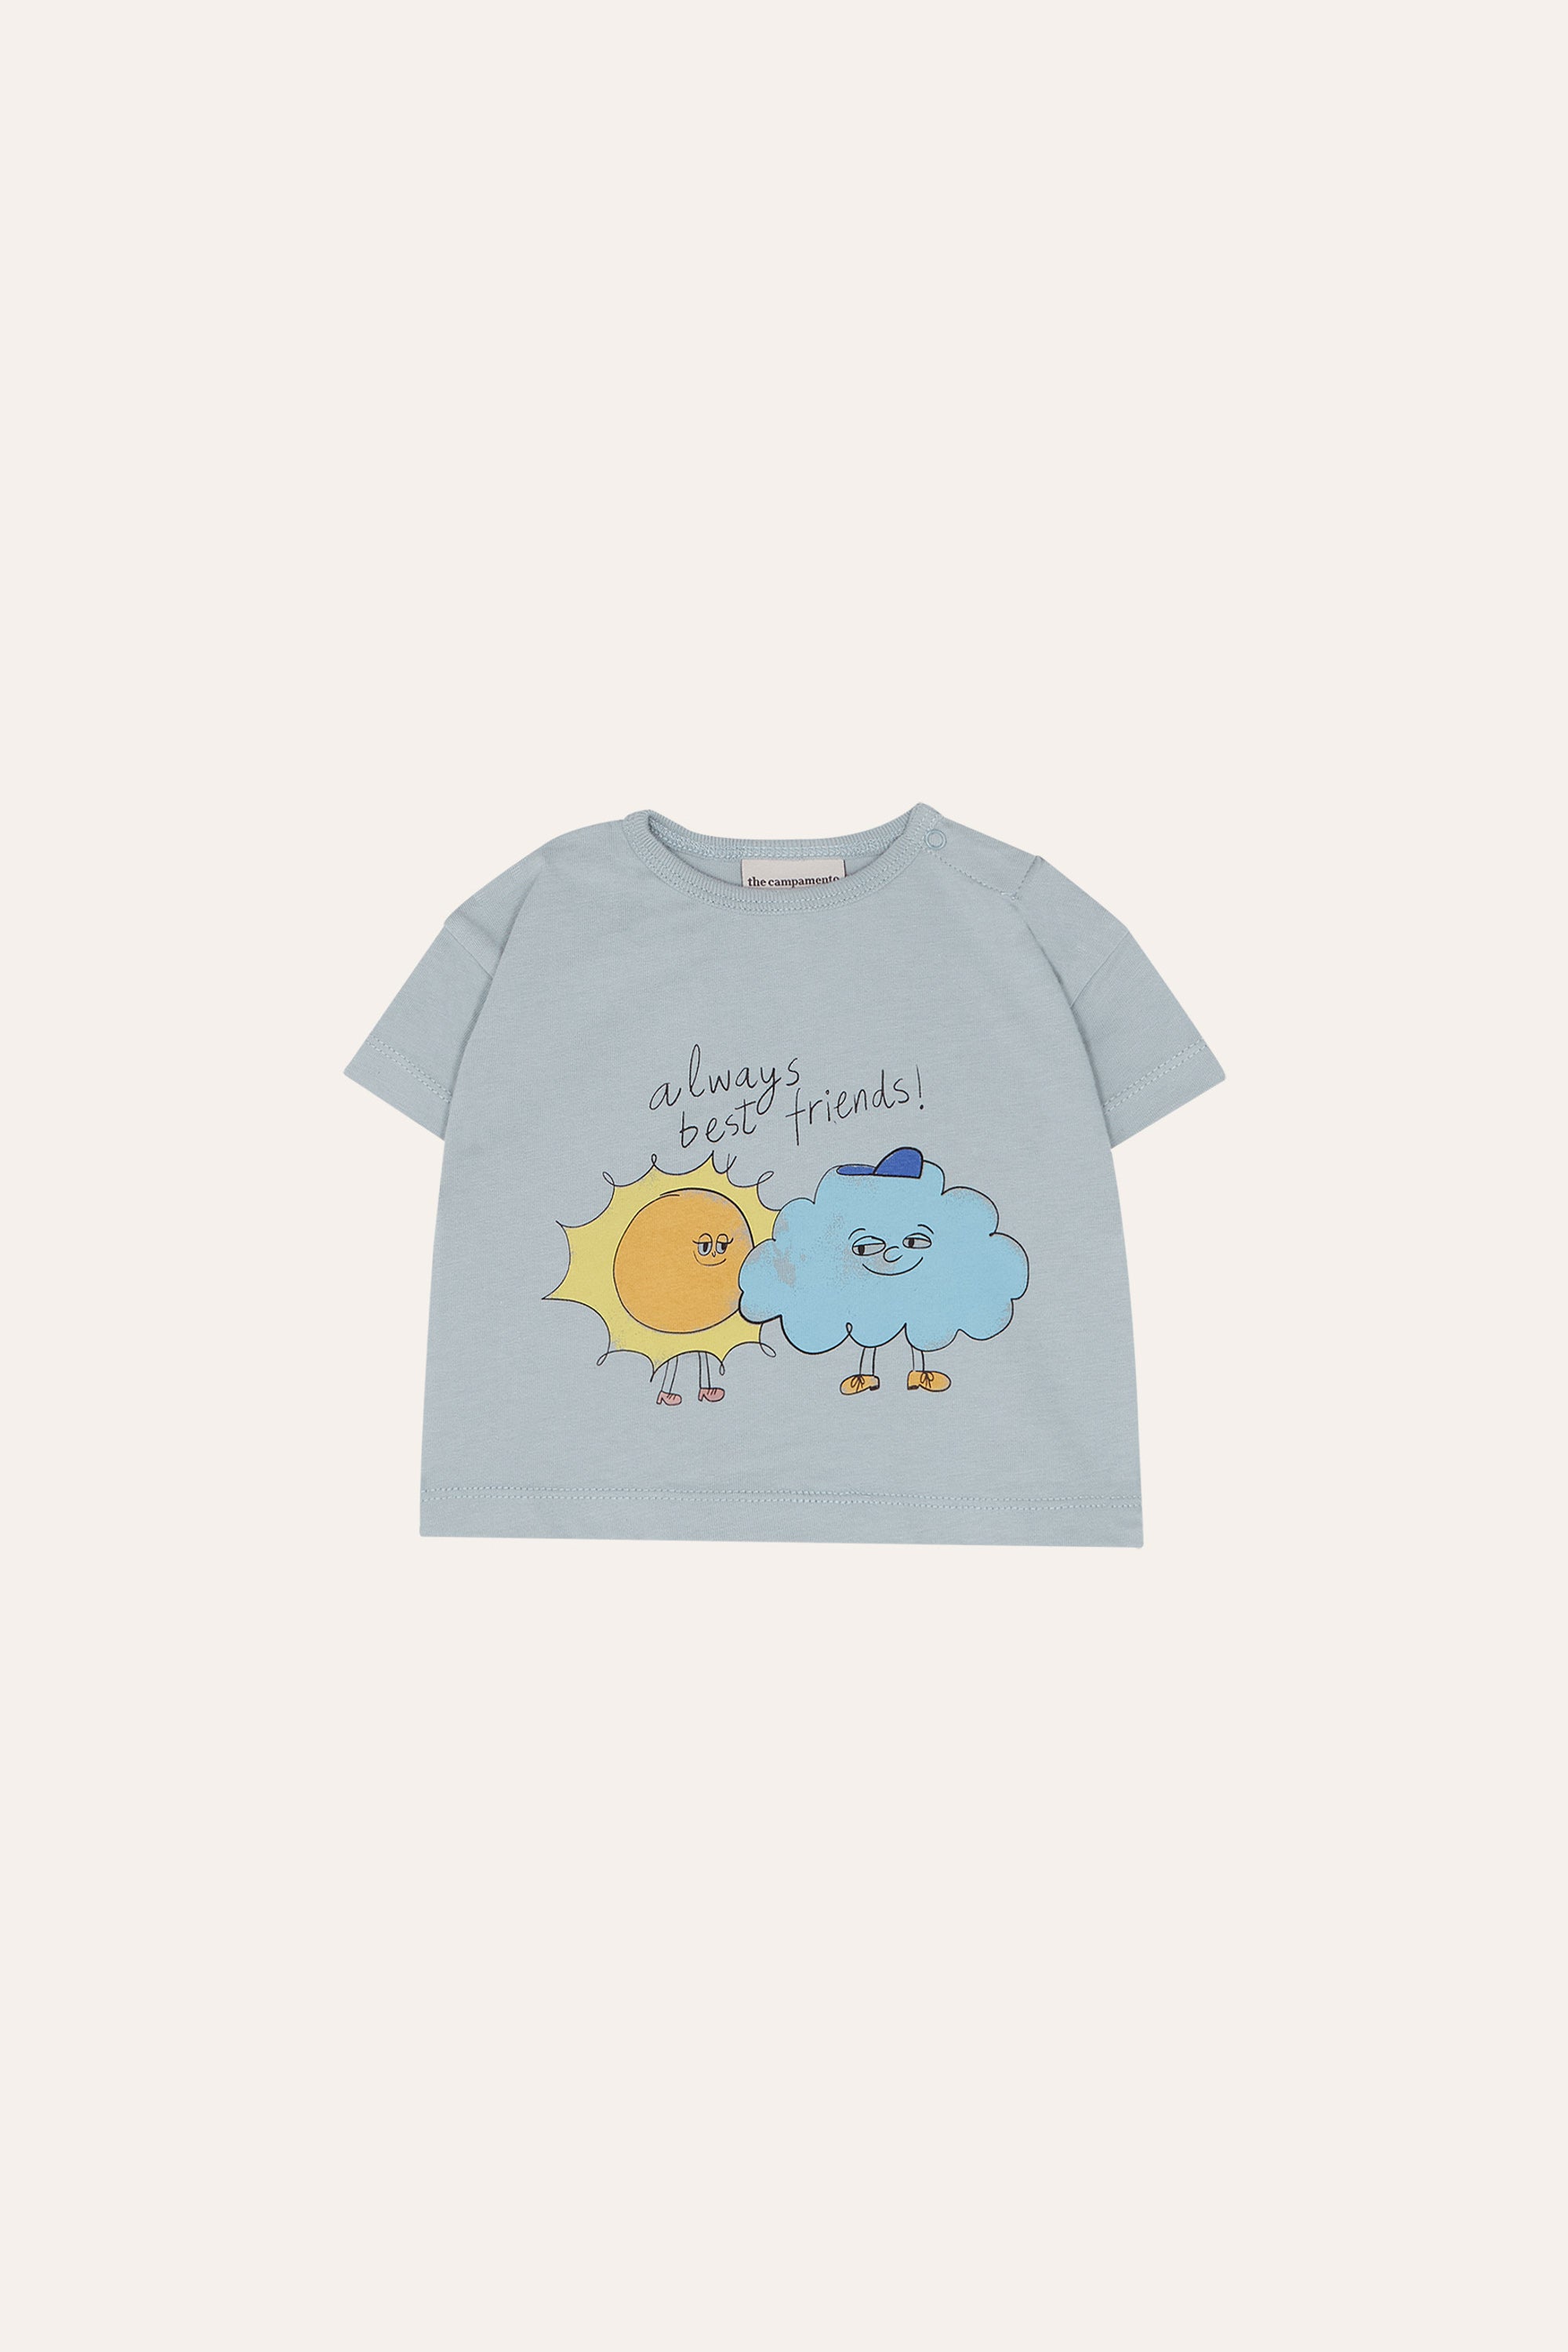 The Campamento - Best friends baby t-shirt